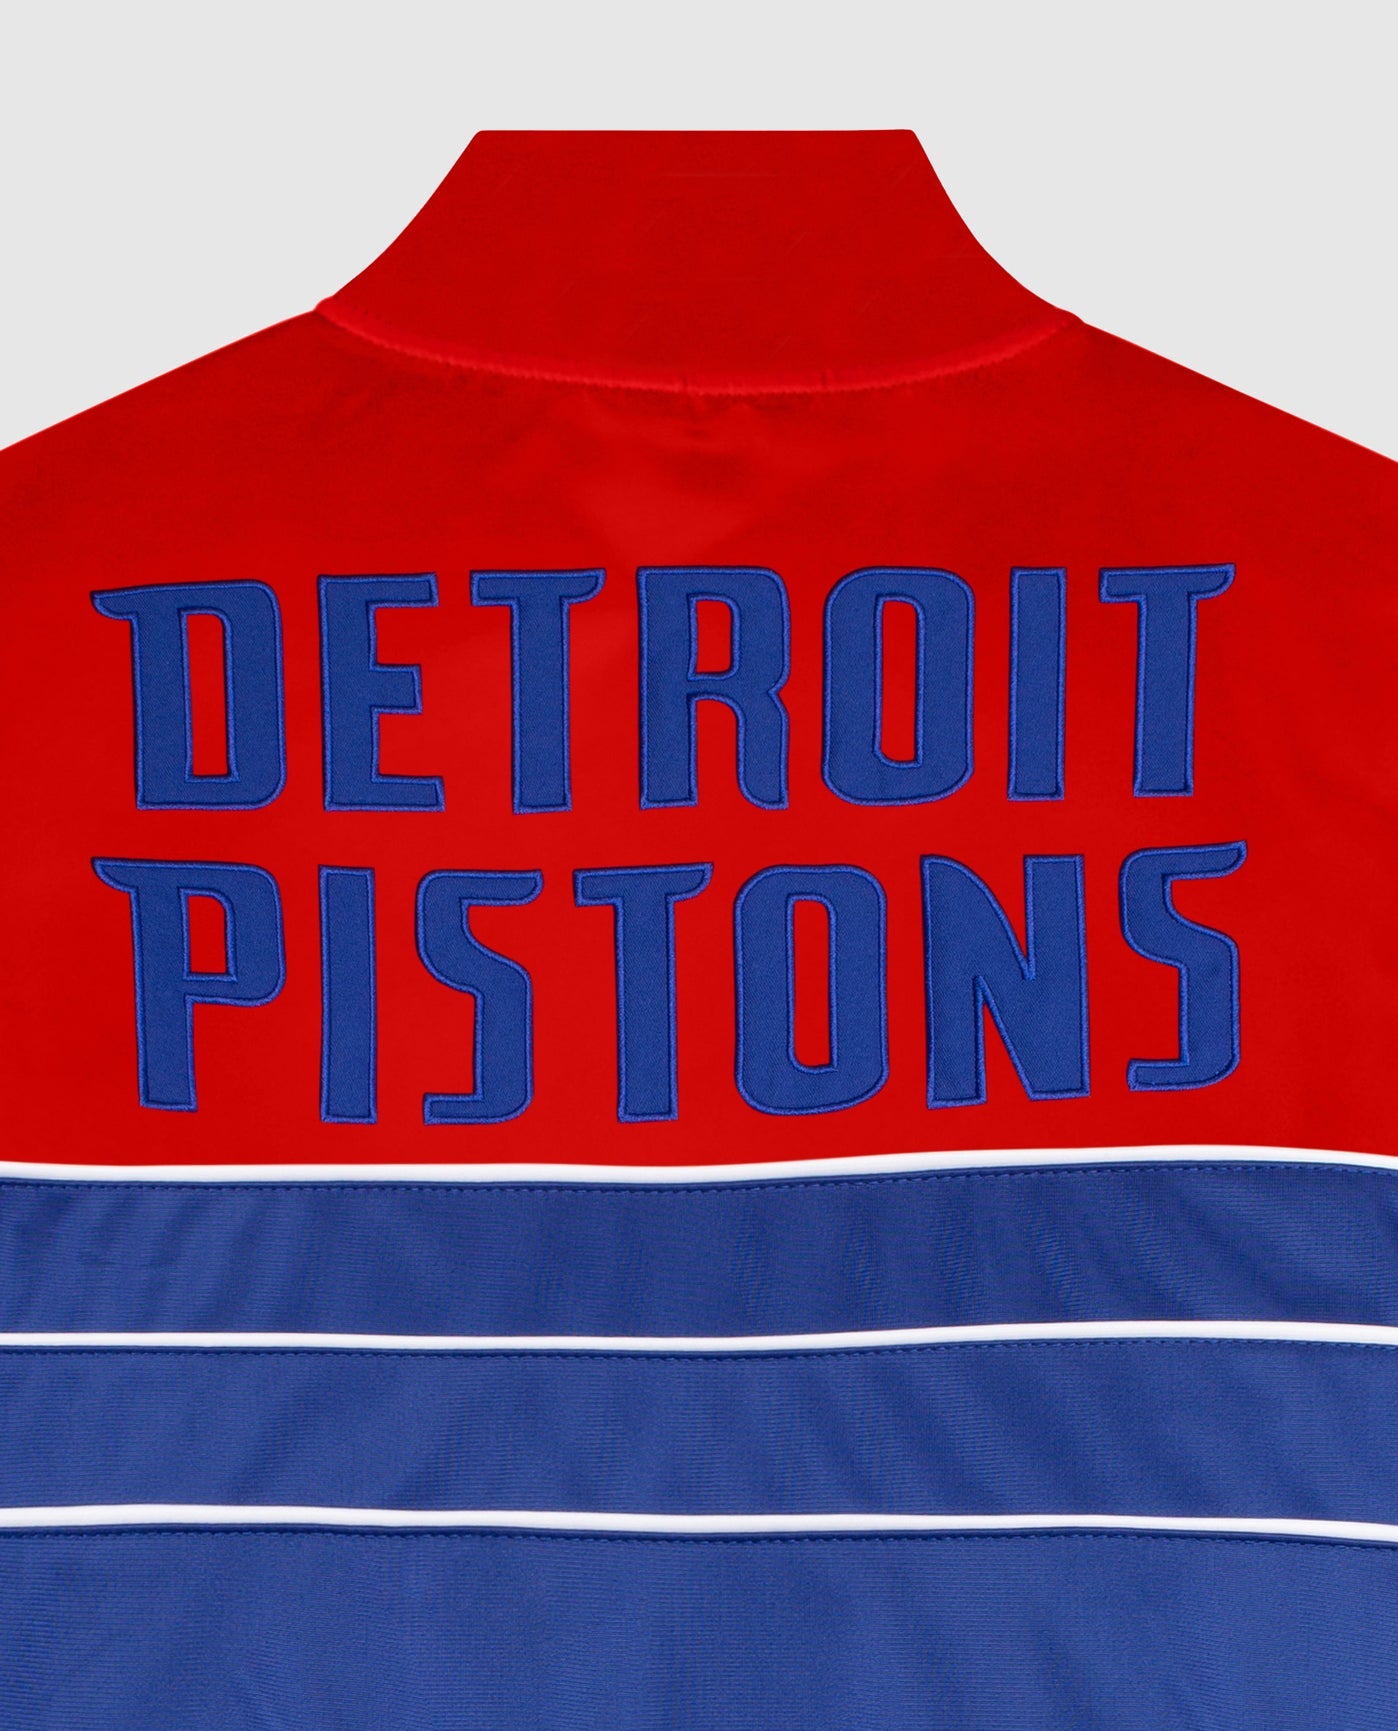 Starter Detroit Pistons Color Block Jacket